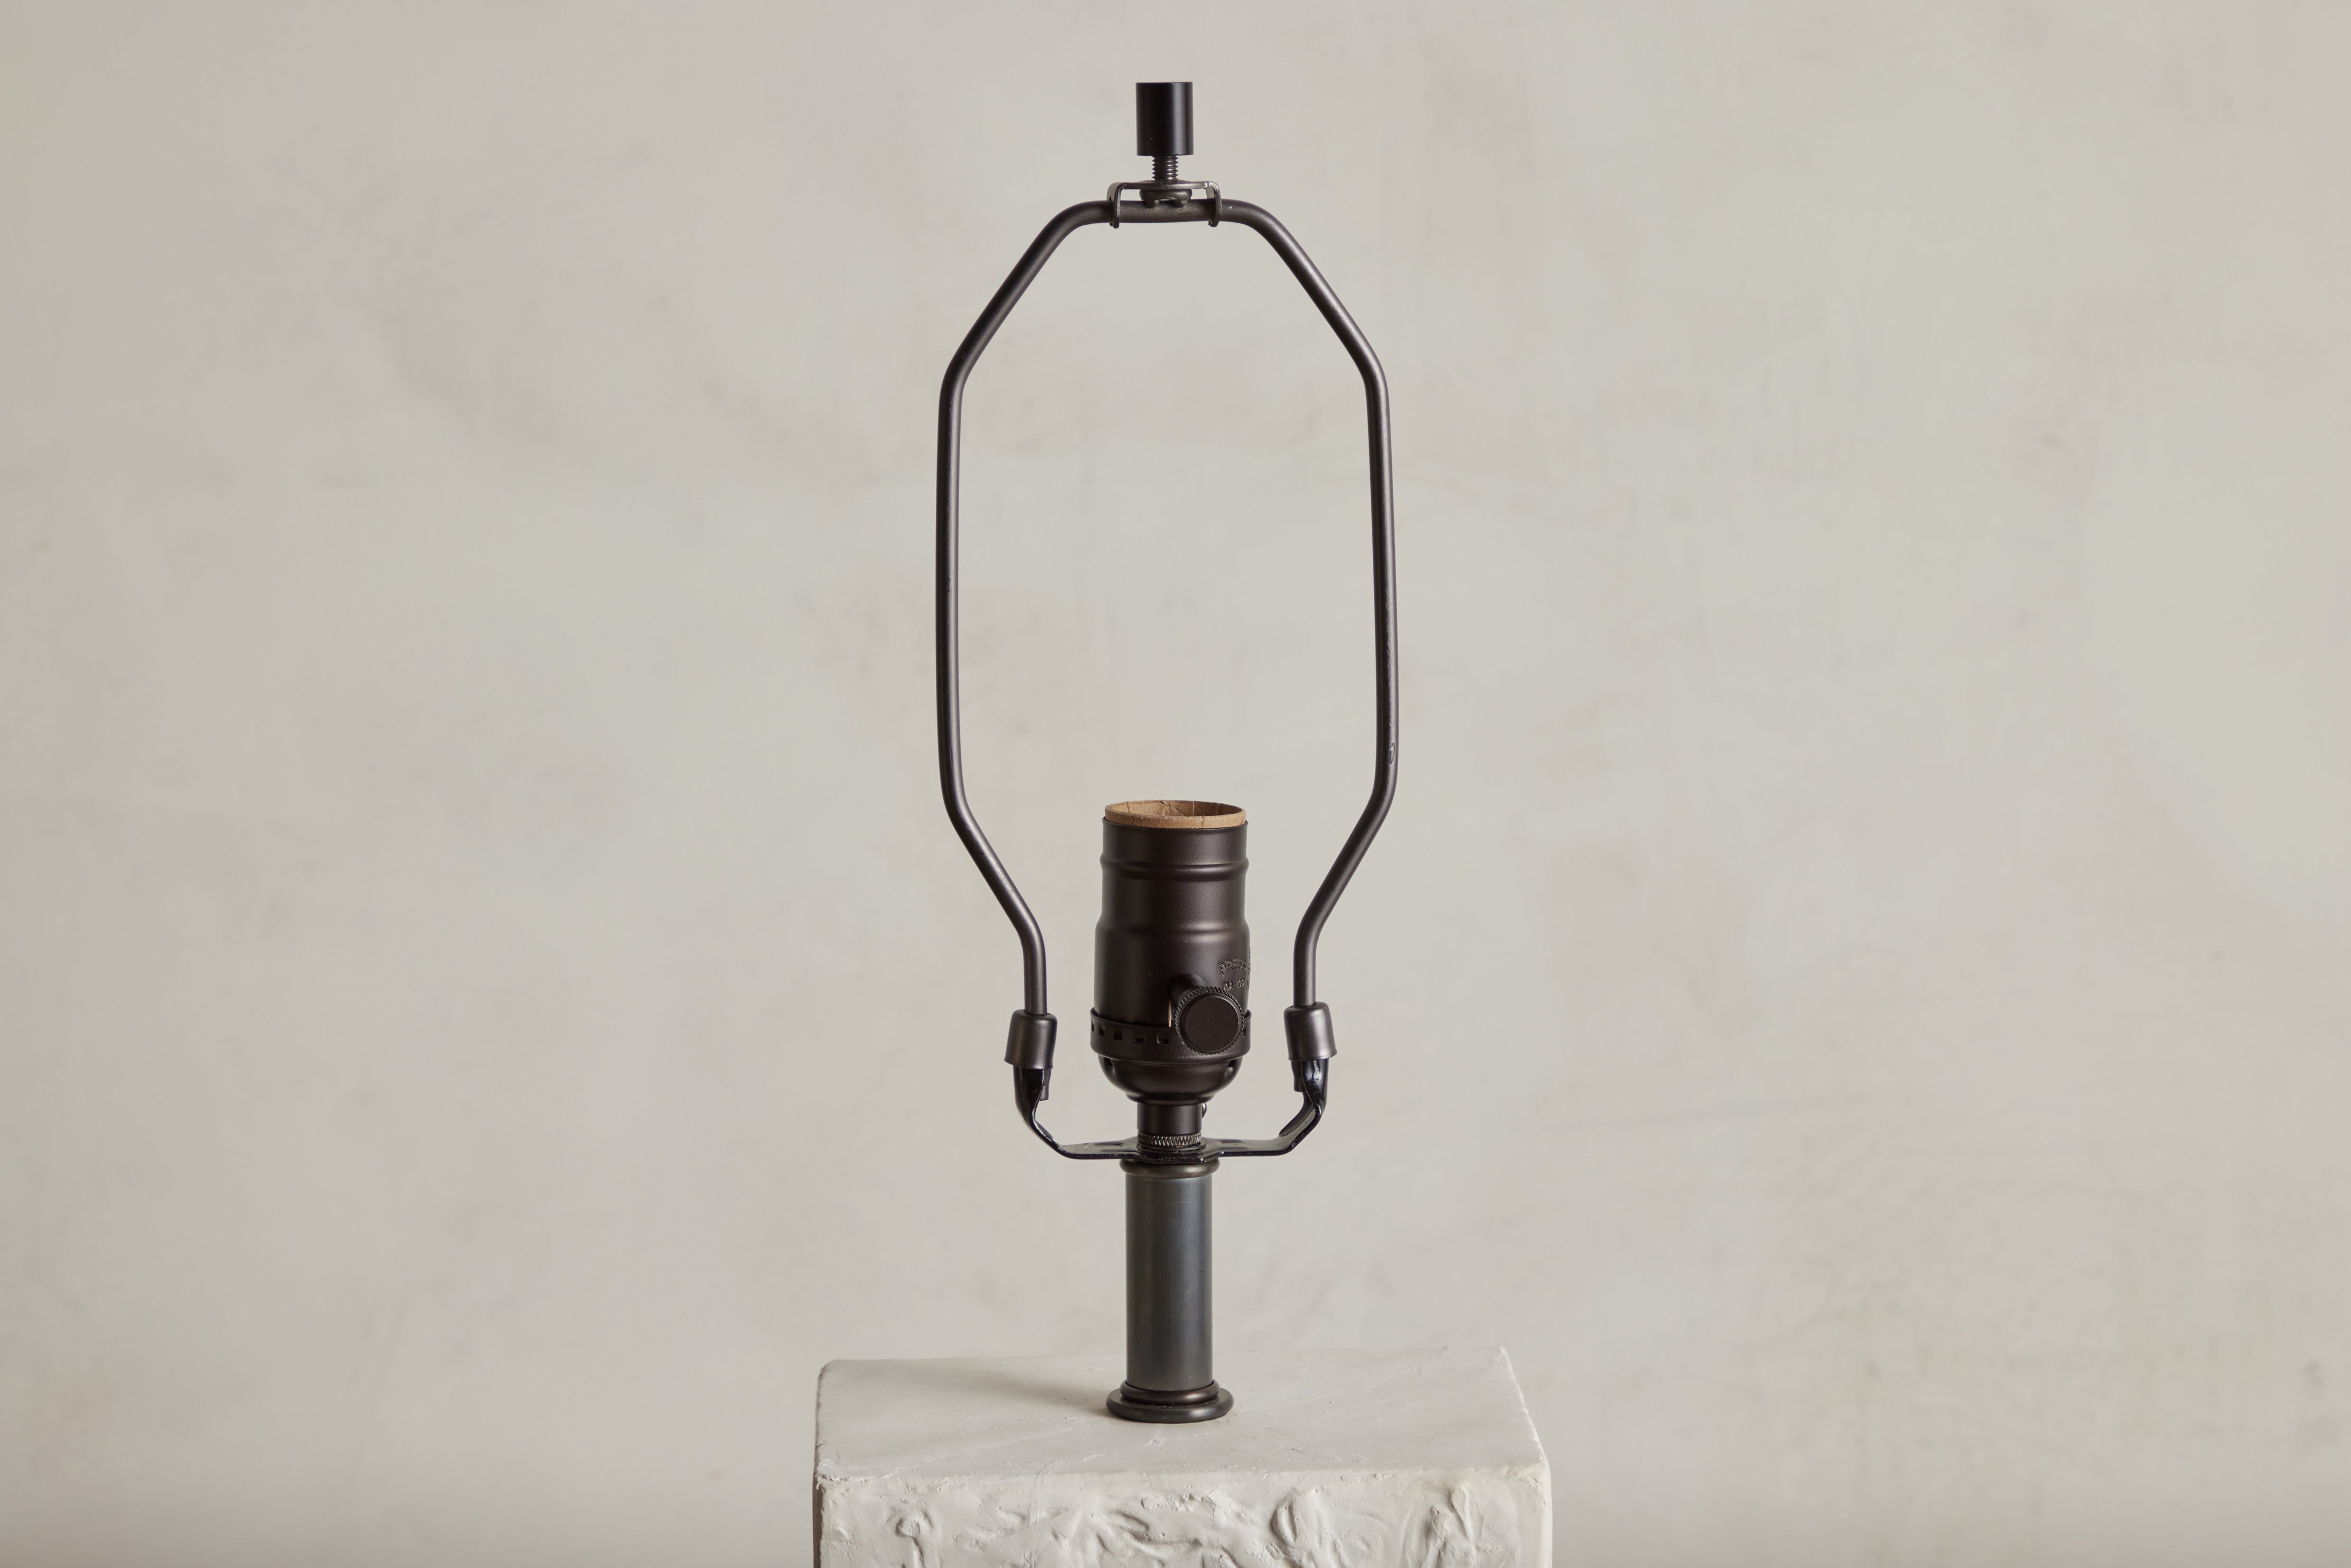 La Soufflerie, The Bather Lamp